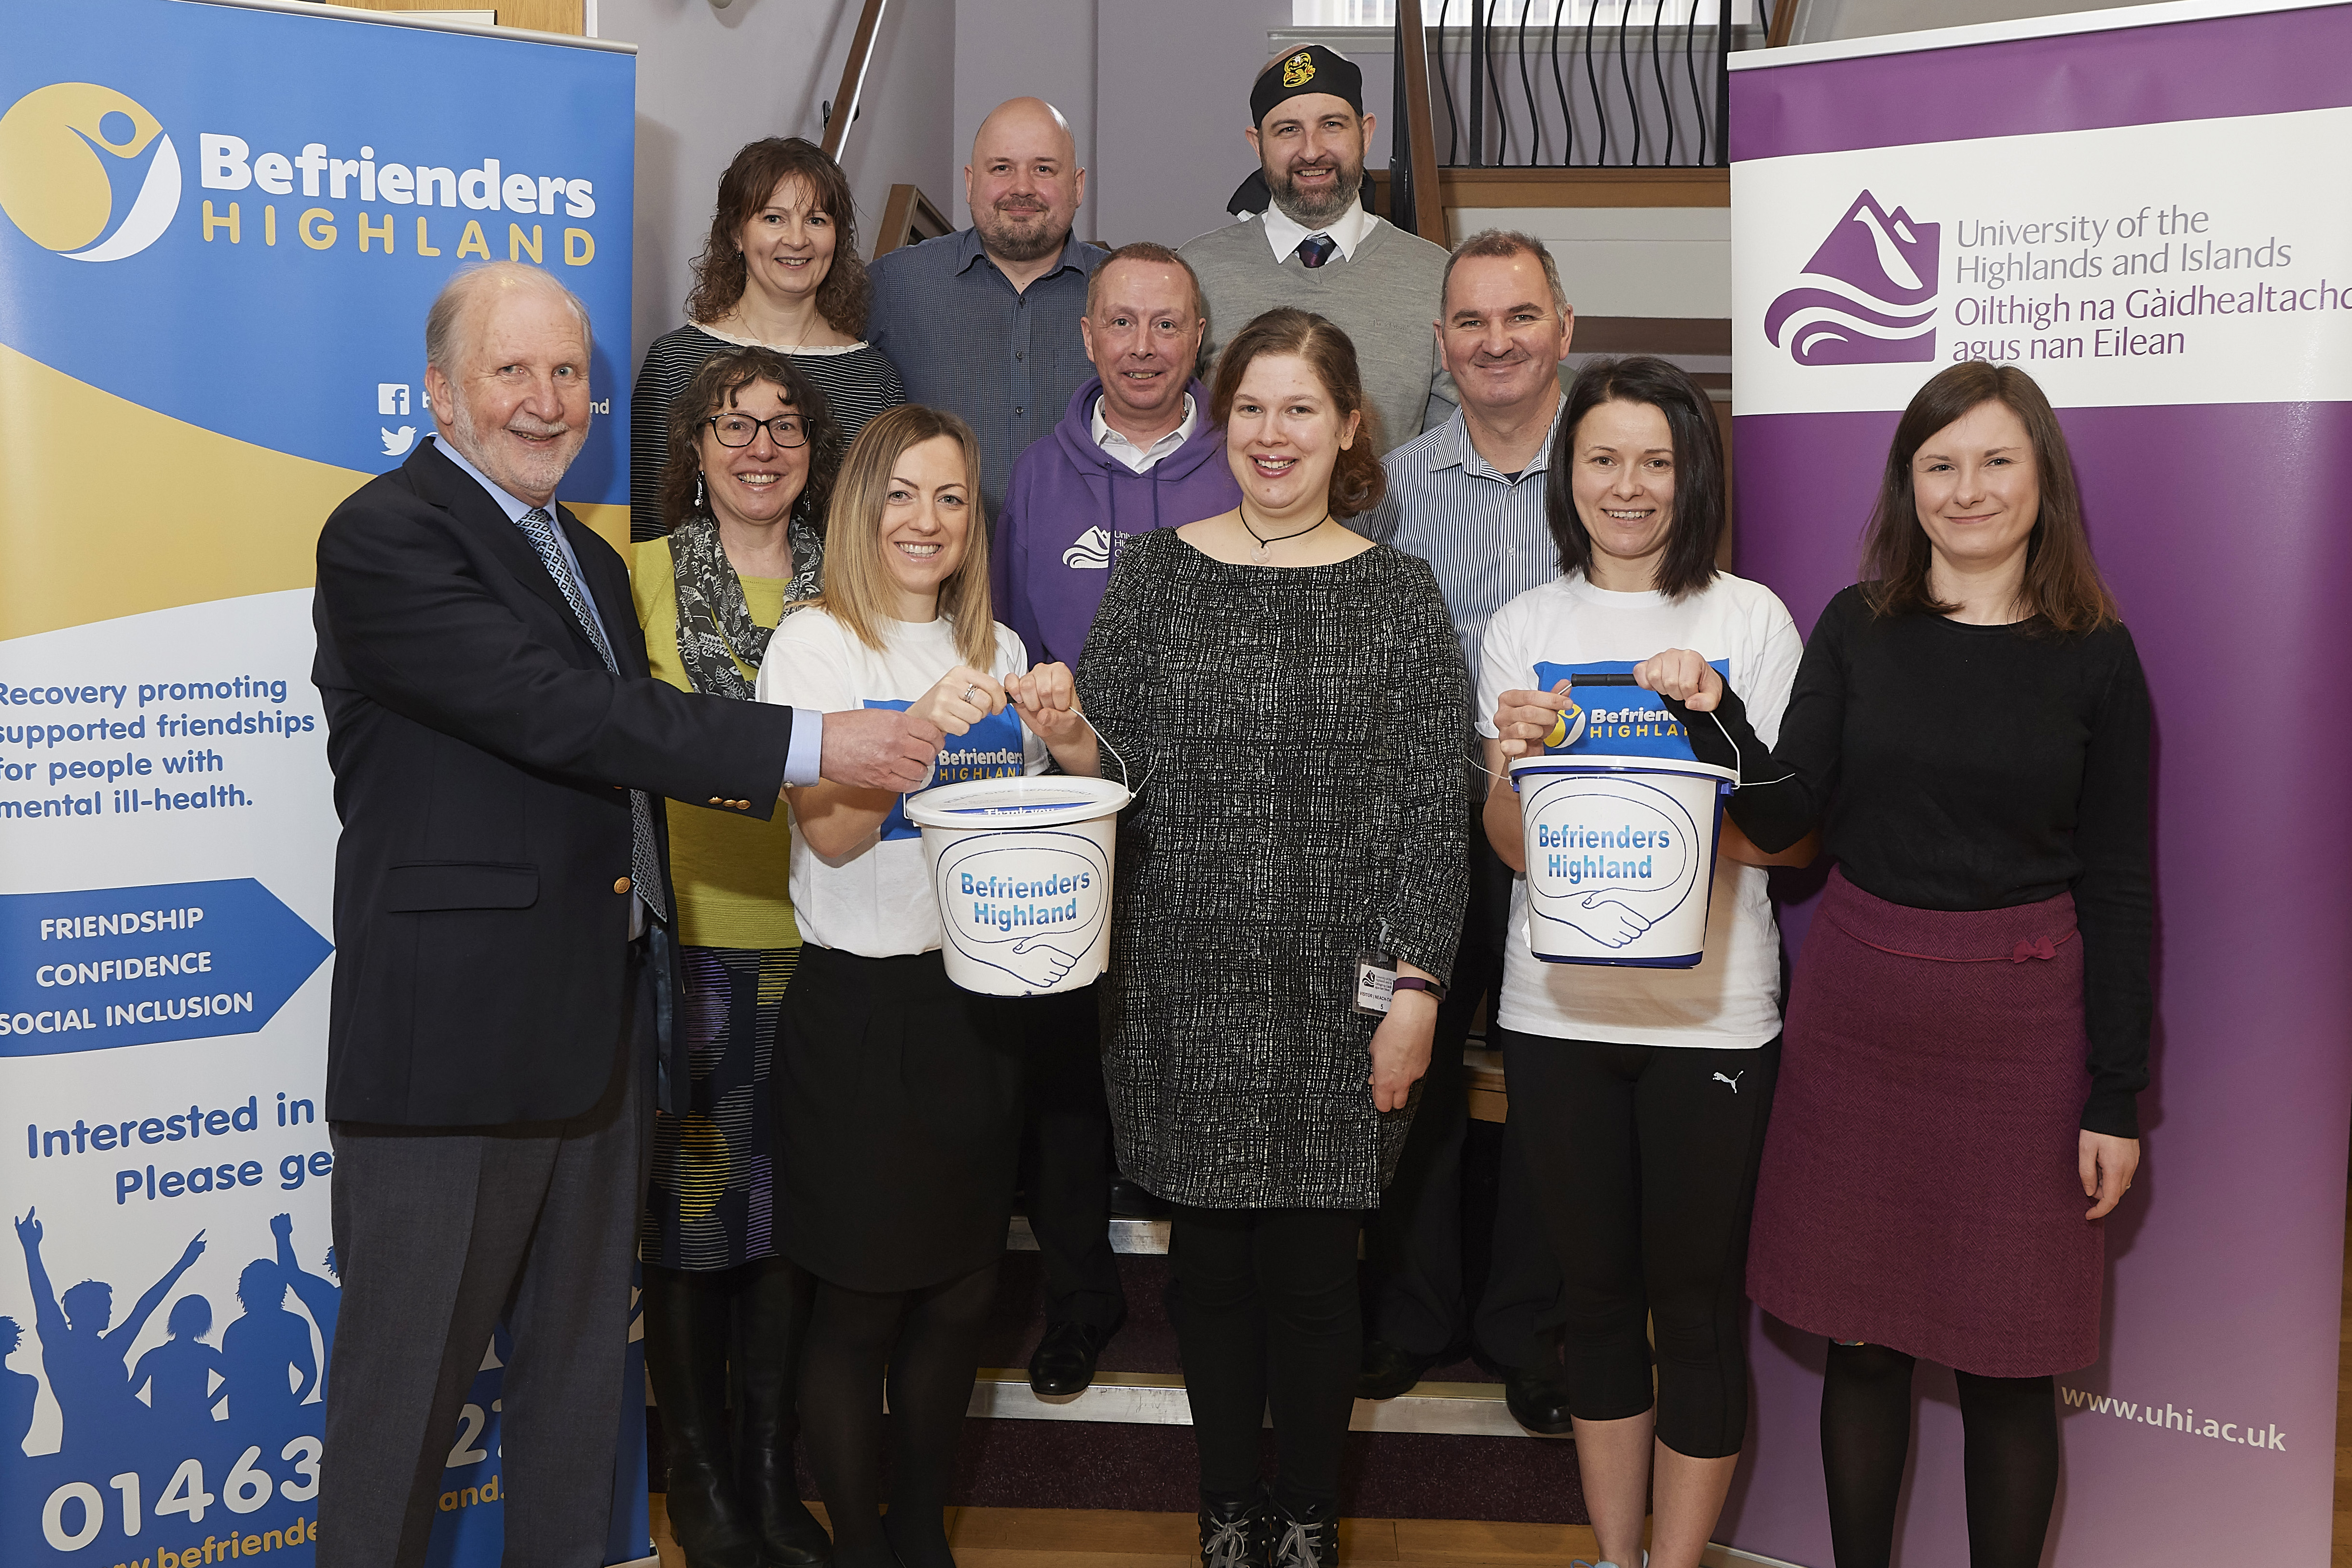 University staff have raised over £5000 to benefit Befrienders Highland